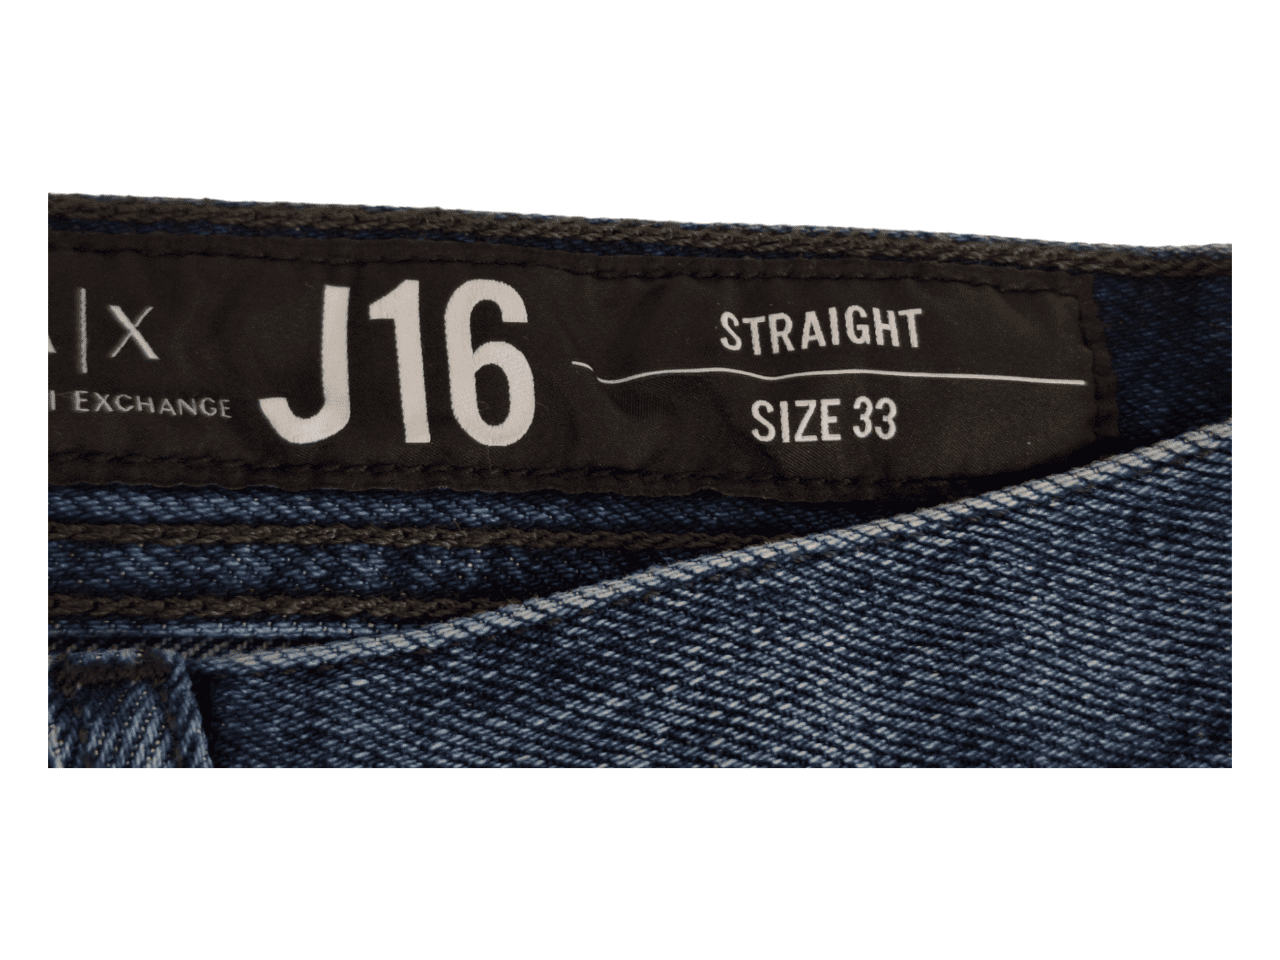 Jeans ARMANI brut modèle J16 straight size 33